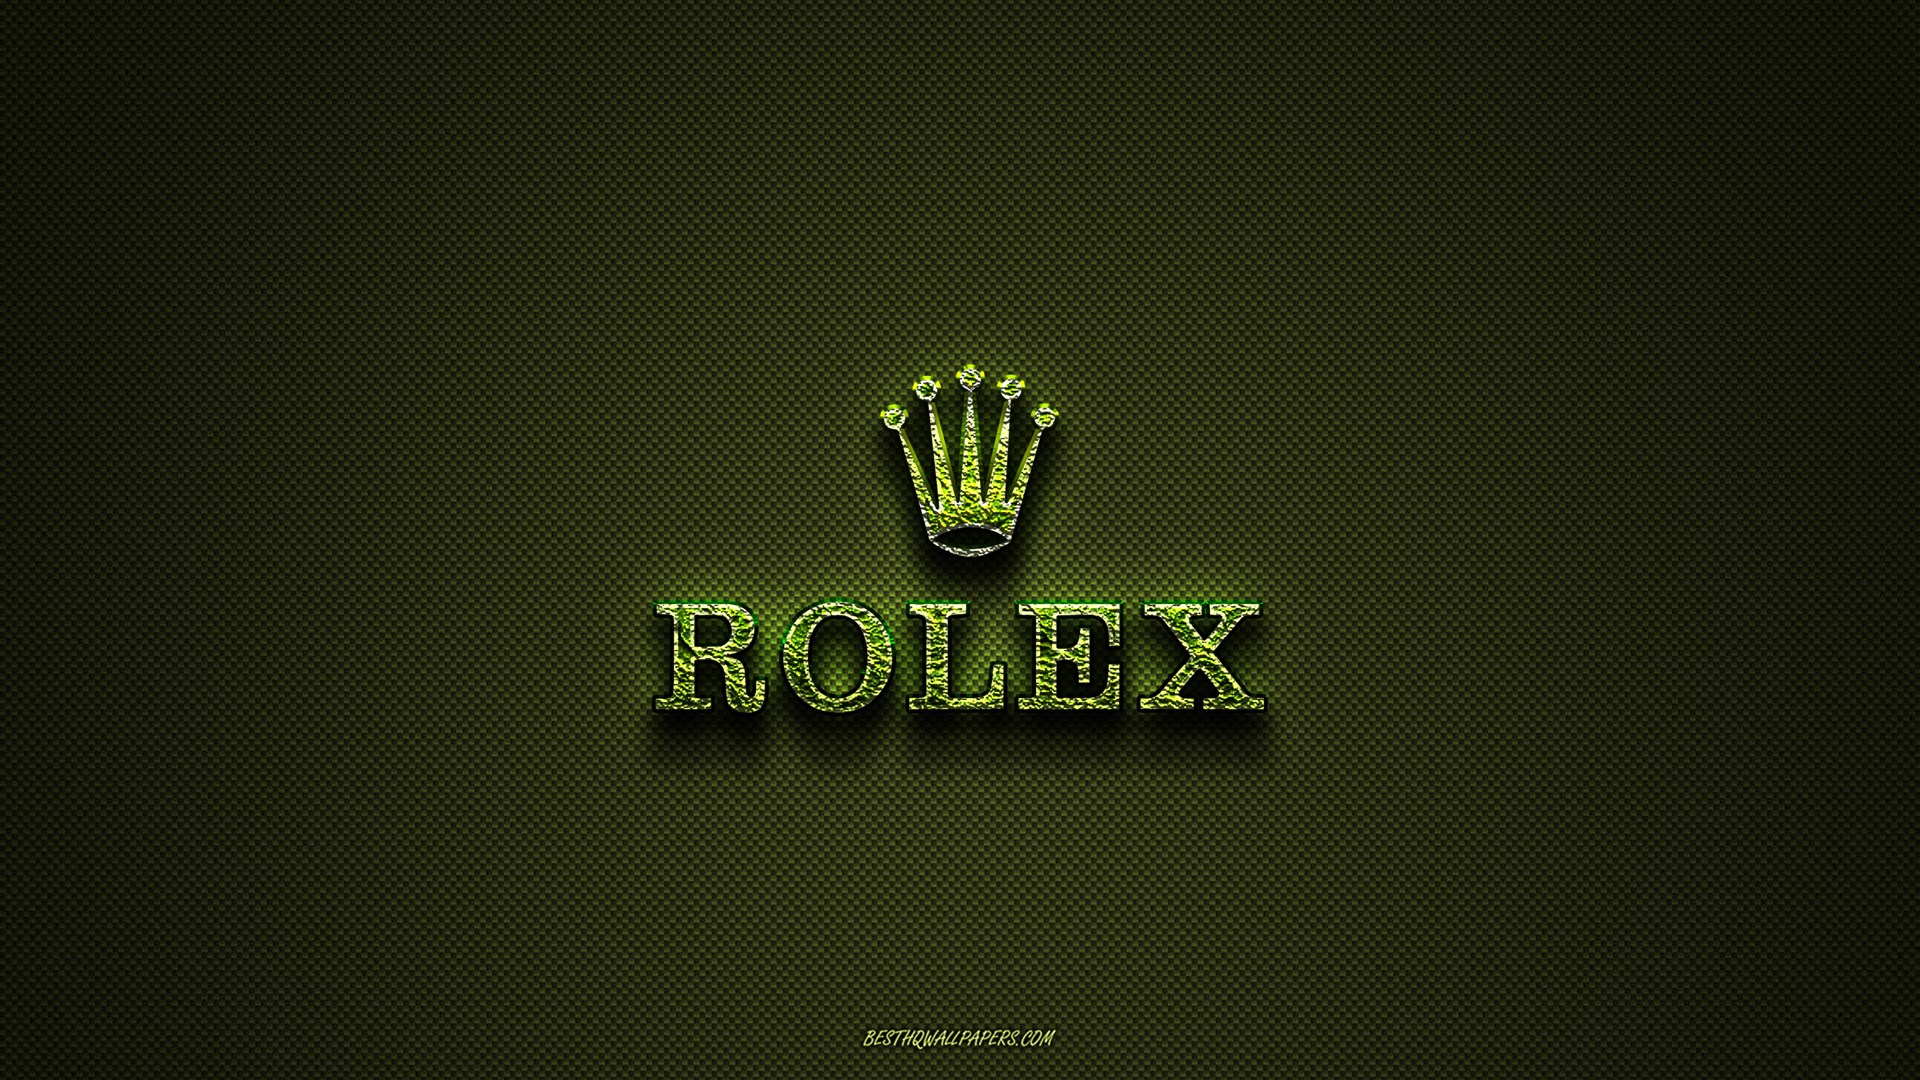 rolex-logo-green-creative-logo-floral-art-logo-rolex-emblem-green-carbon-fiber-texture-besthqwallpapers.com-1920x1080.jpg